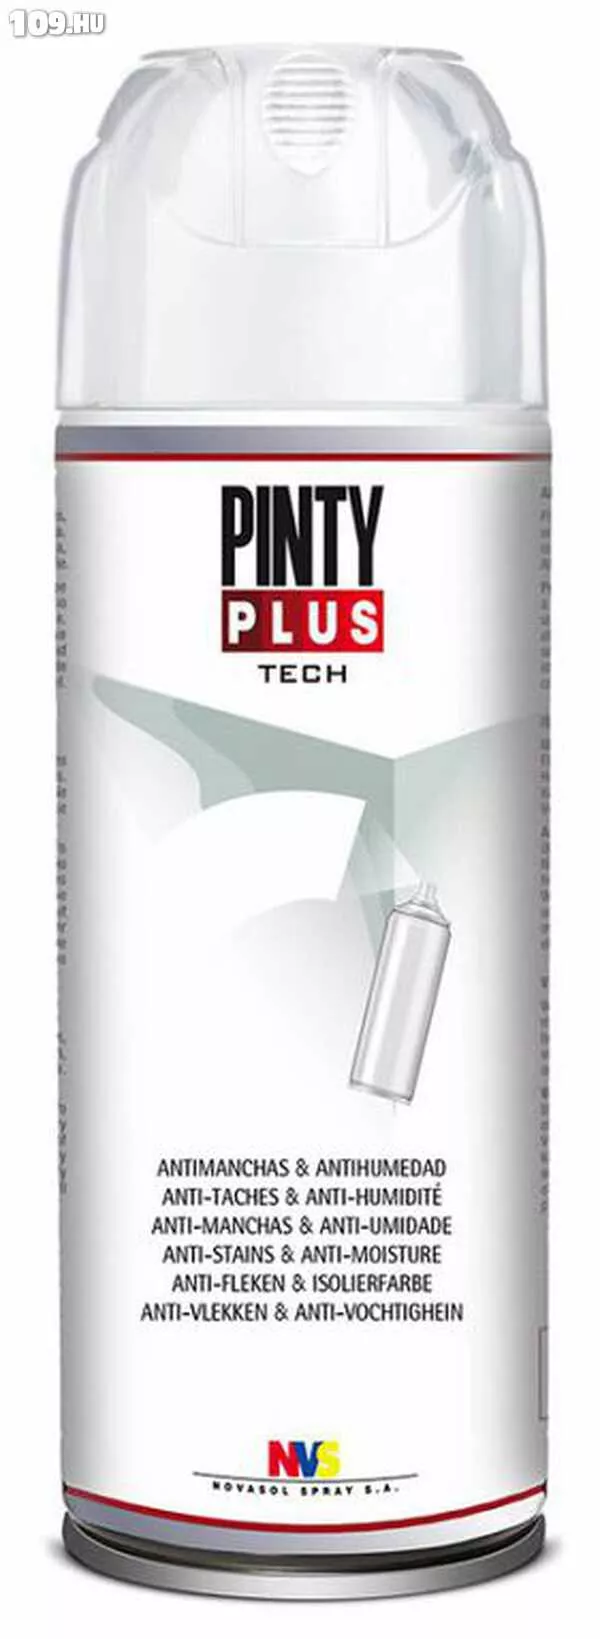 Folttakaró spray Pinty plus tech 400ml